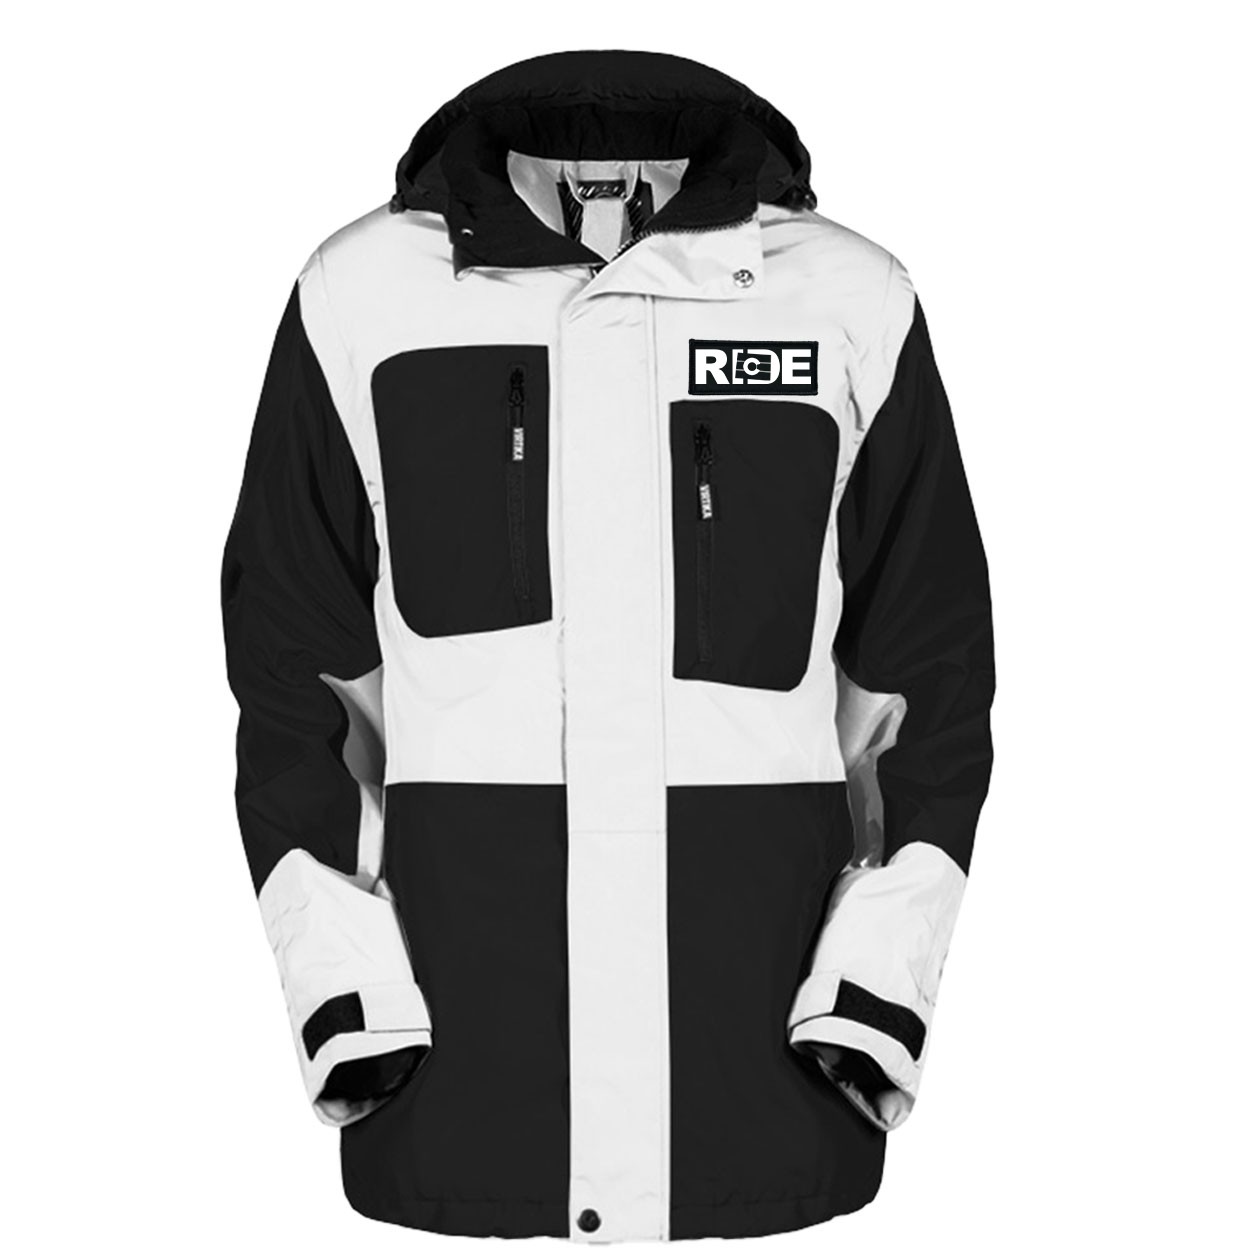 Ride Colorado Classic Woven Patch Pro Snowboard Jacket (Black/White)